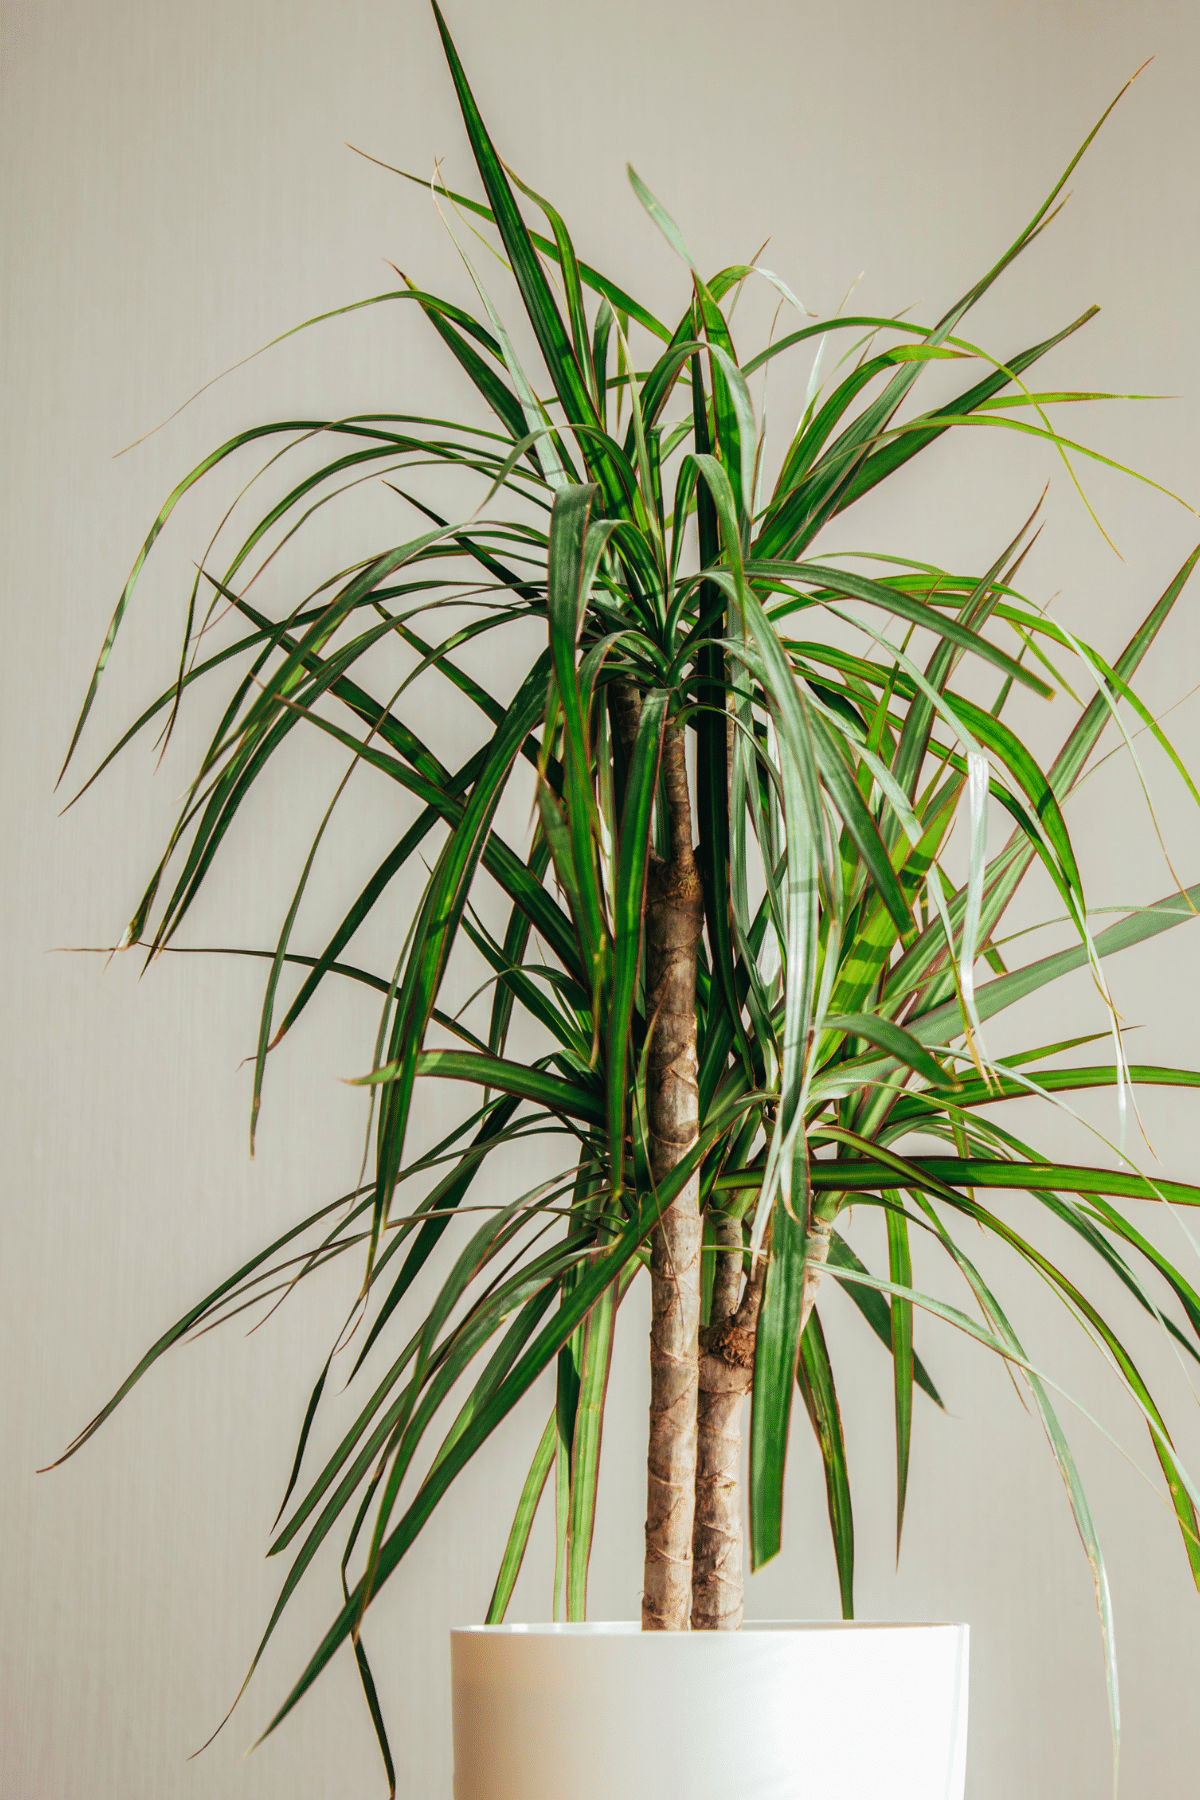 Close-up view of Madagascar Dragon Tree (Dracaena marginata) in a white pot.